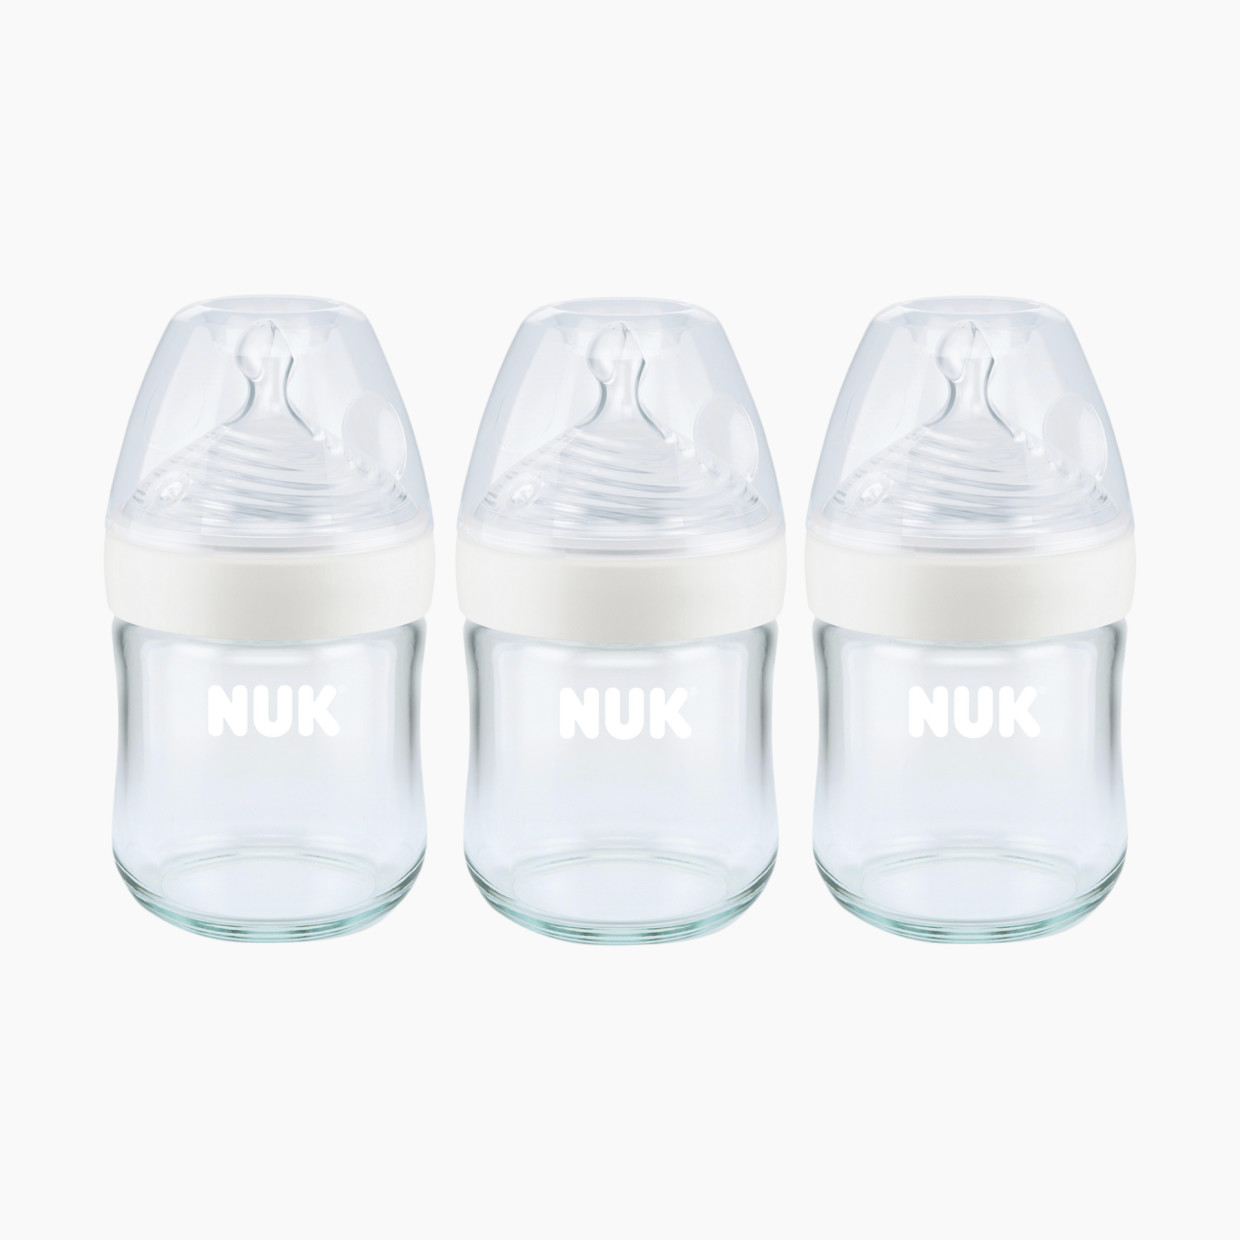 NUK Simply Natural Glass (3 Pack) - 4oz.